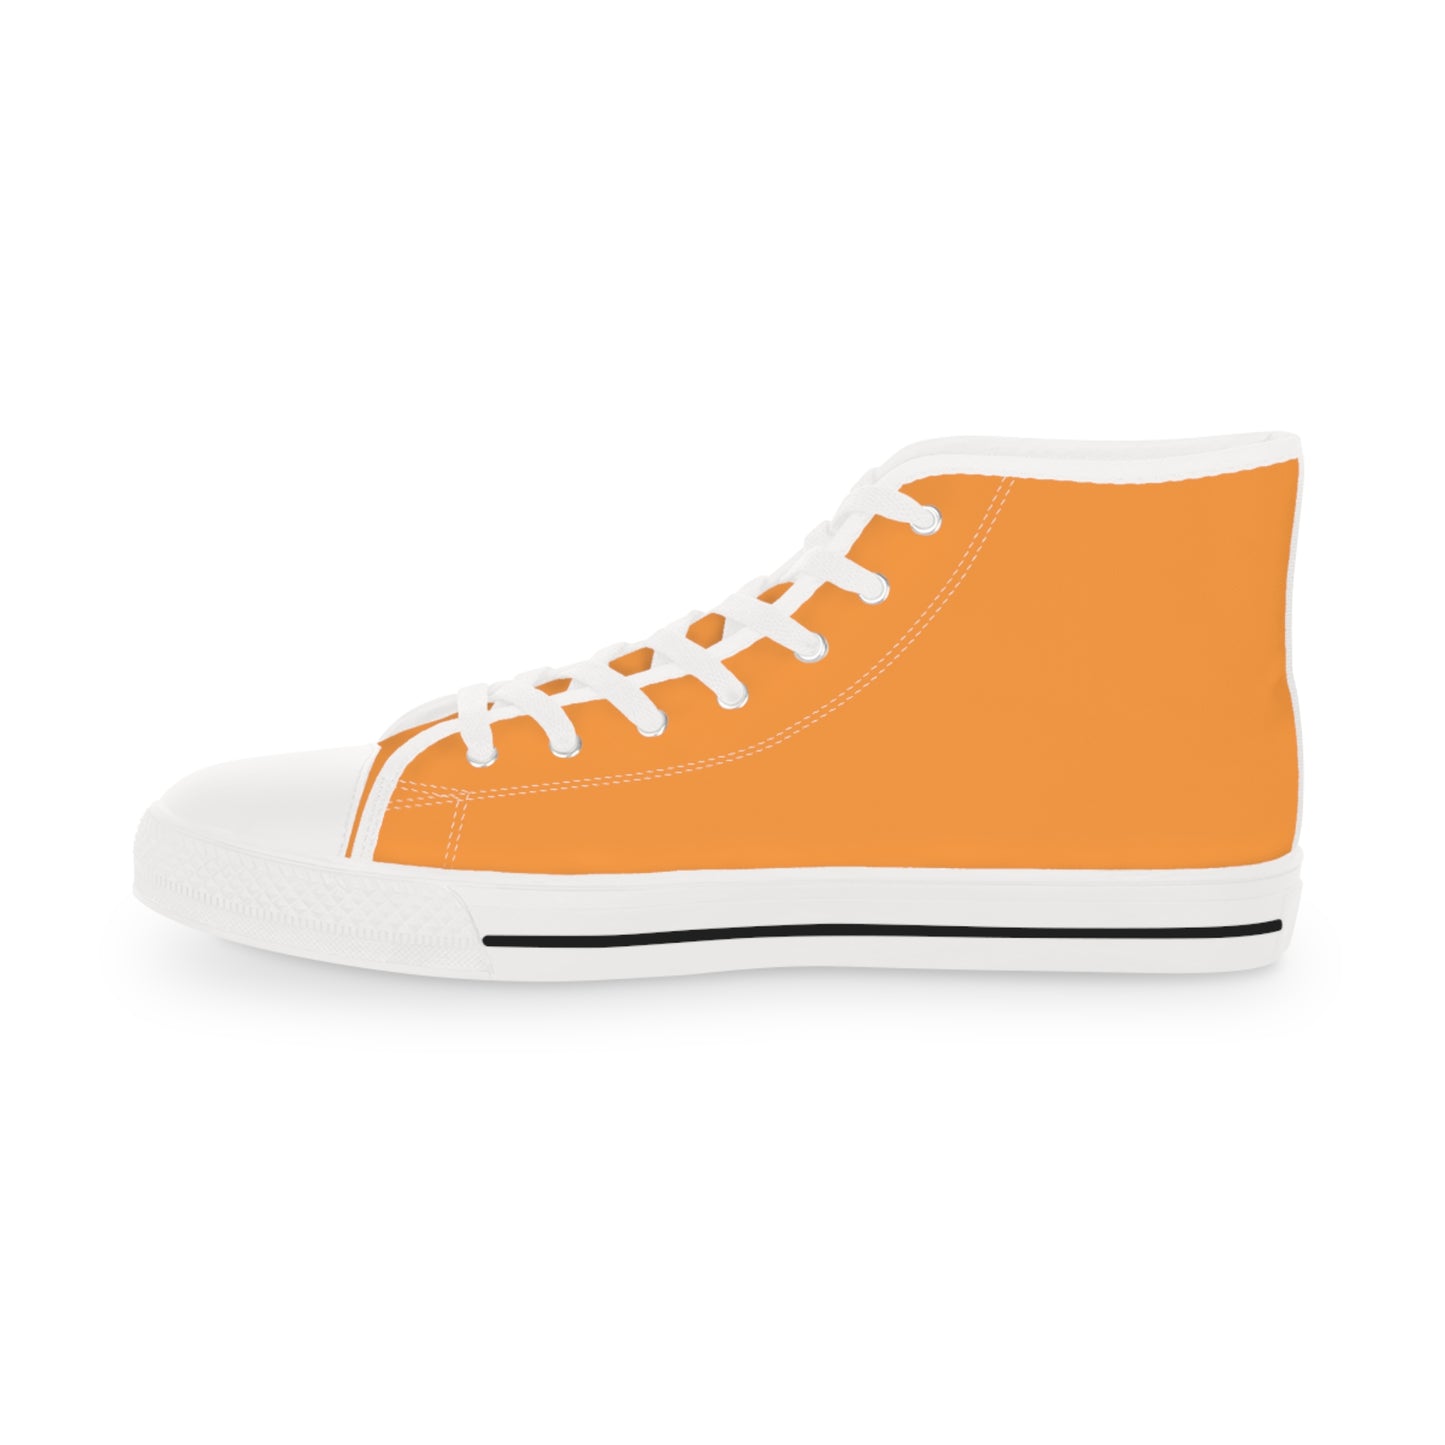 Men's High Top Sneakers - Medium Orange US 14 White sole